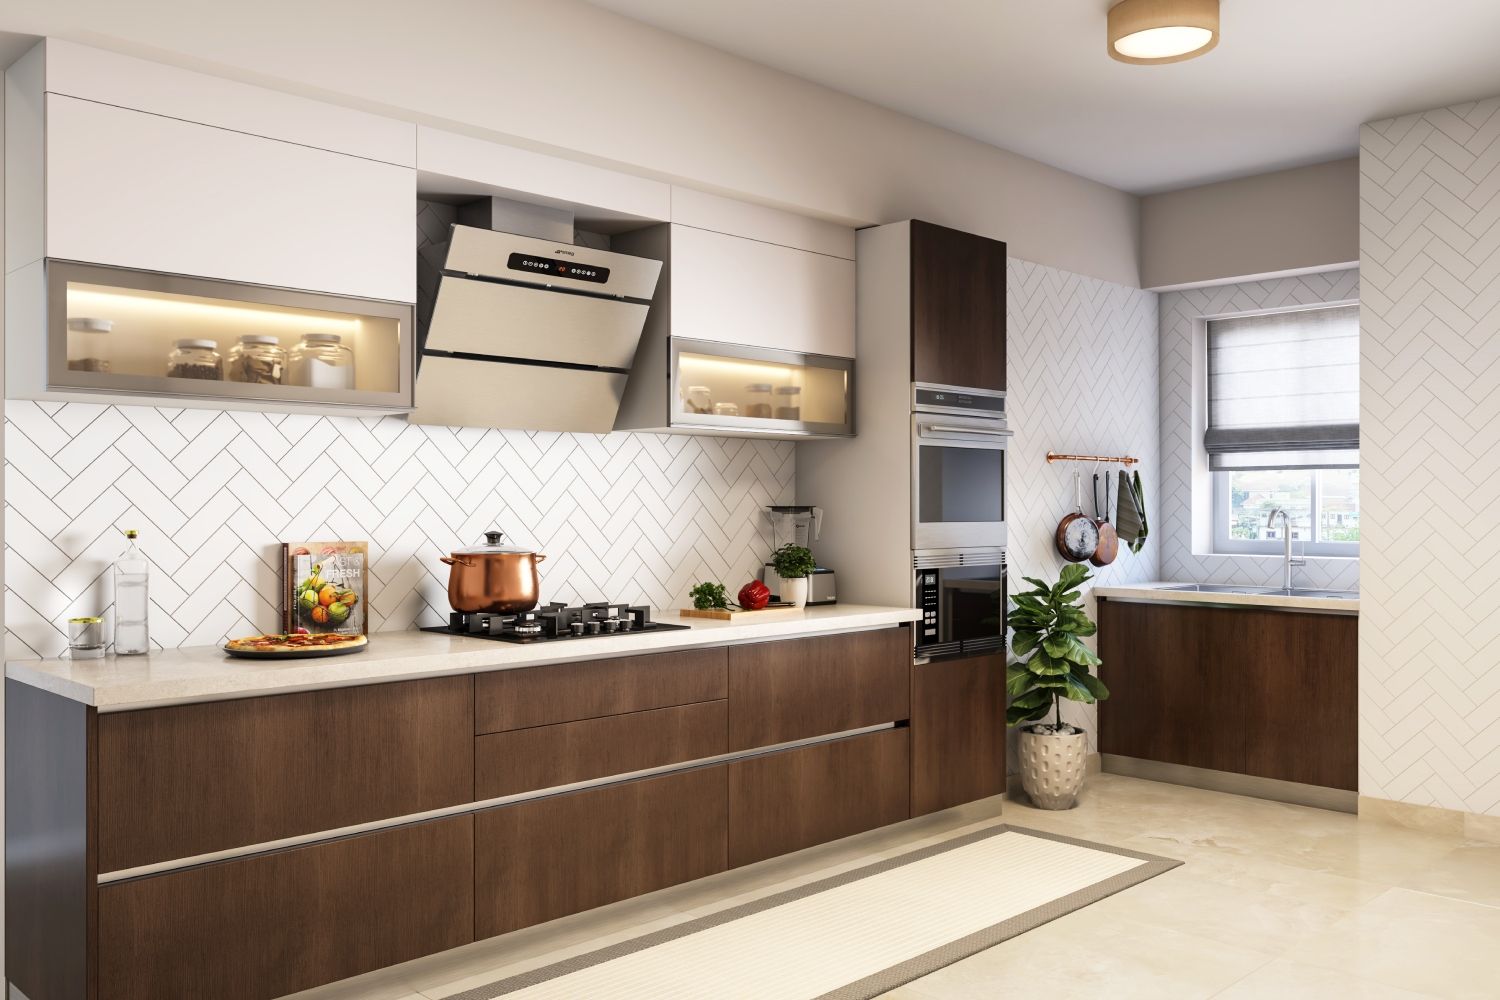 Modern Amati And Frosty White Modular Kitchen Cabinet Design With Herringbone Dado Tiles